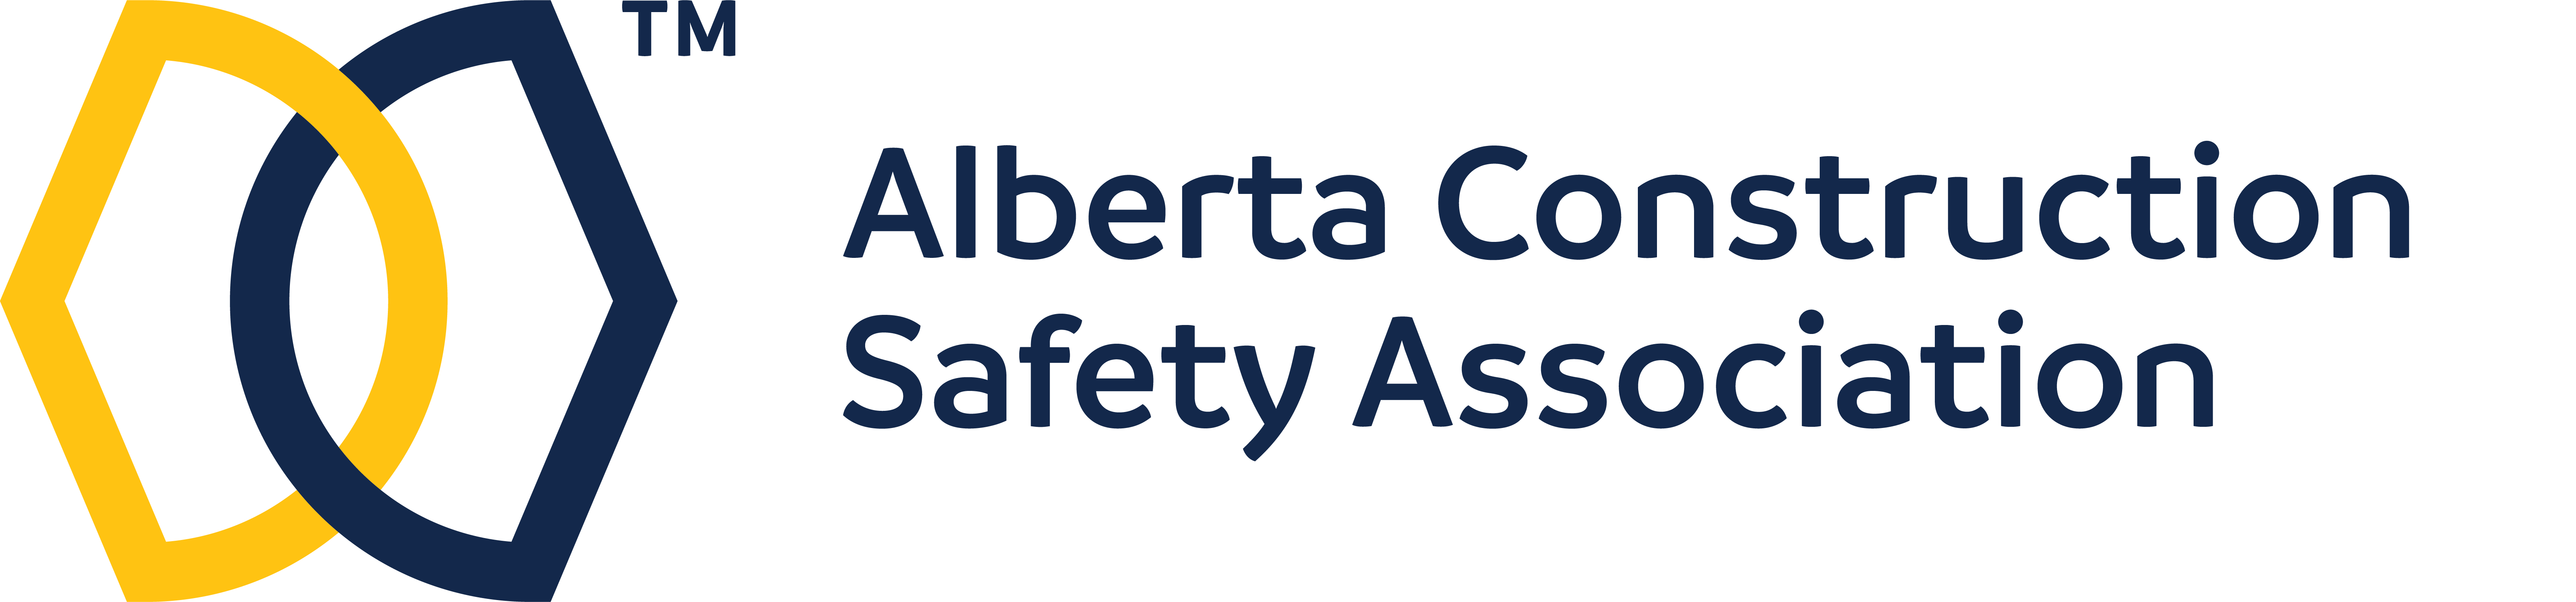 Alberta Construction Safety Association logo